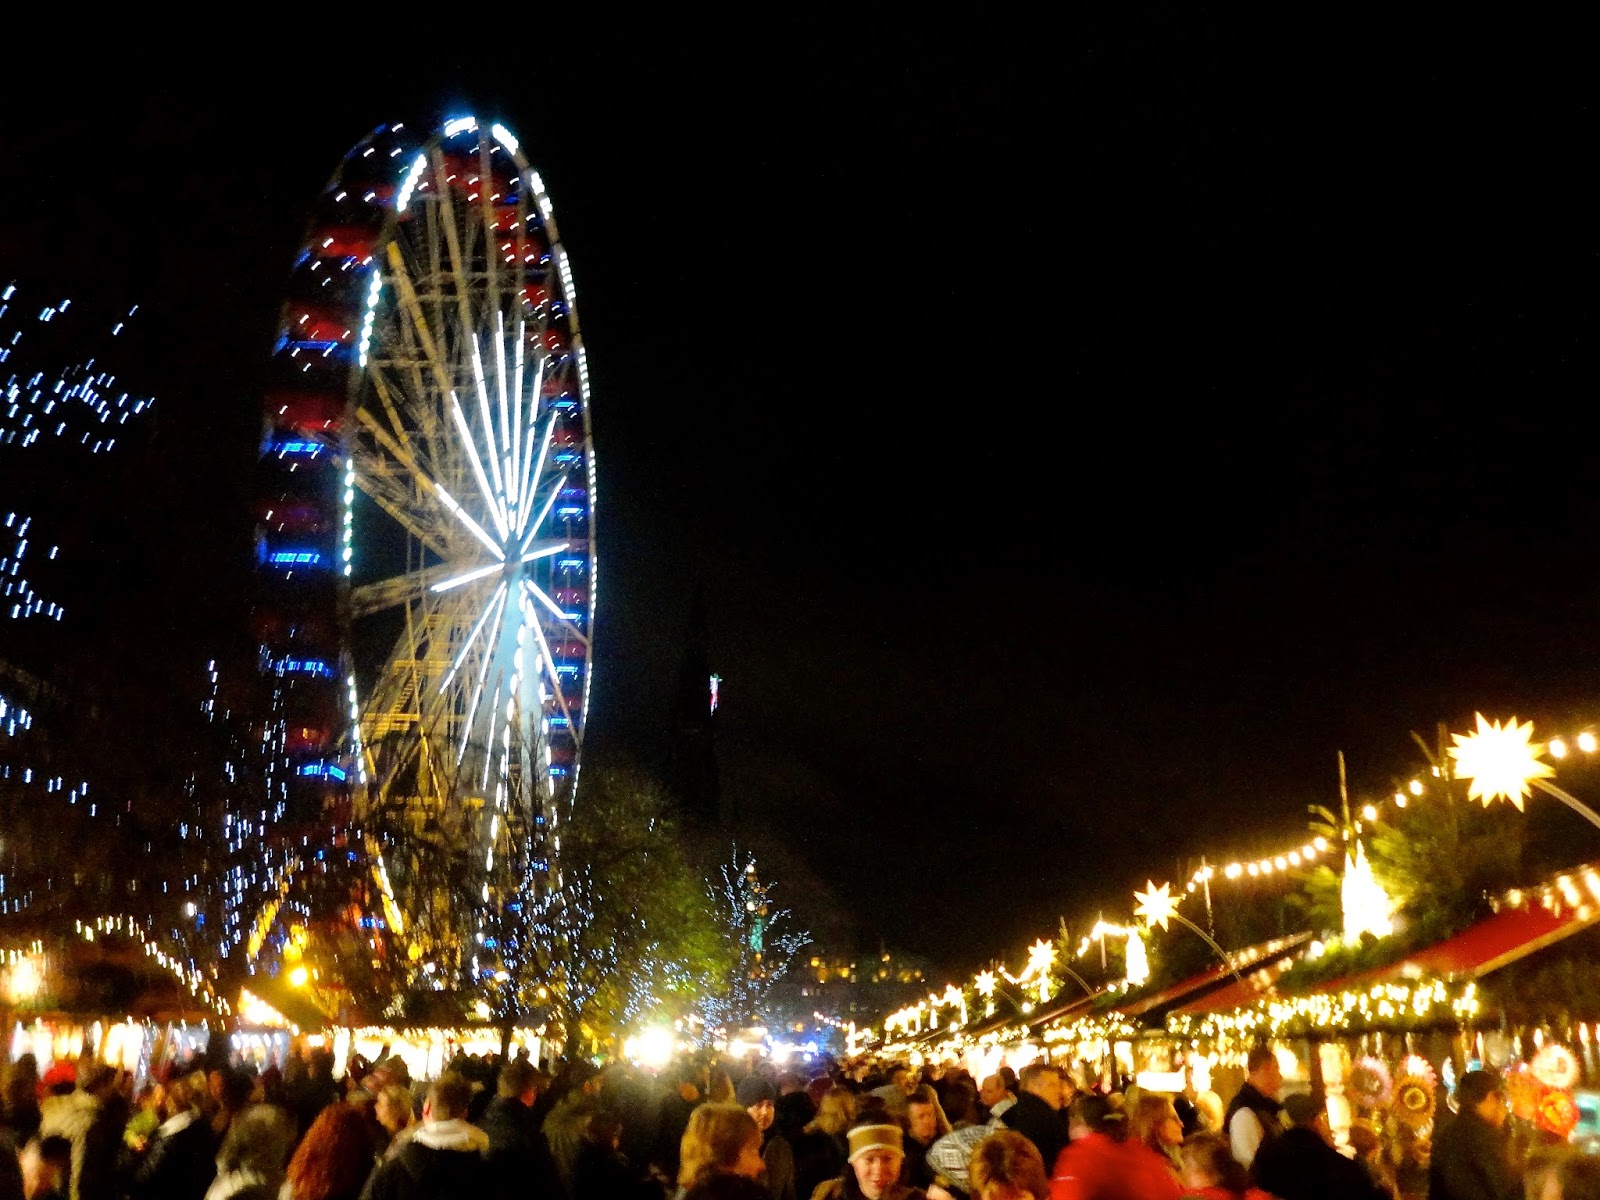 Ferris wheel in Edinburgh Winter Wonderland at Christmas in Princes Street Gardens